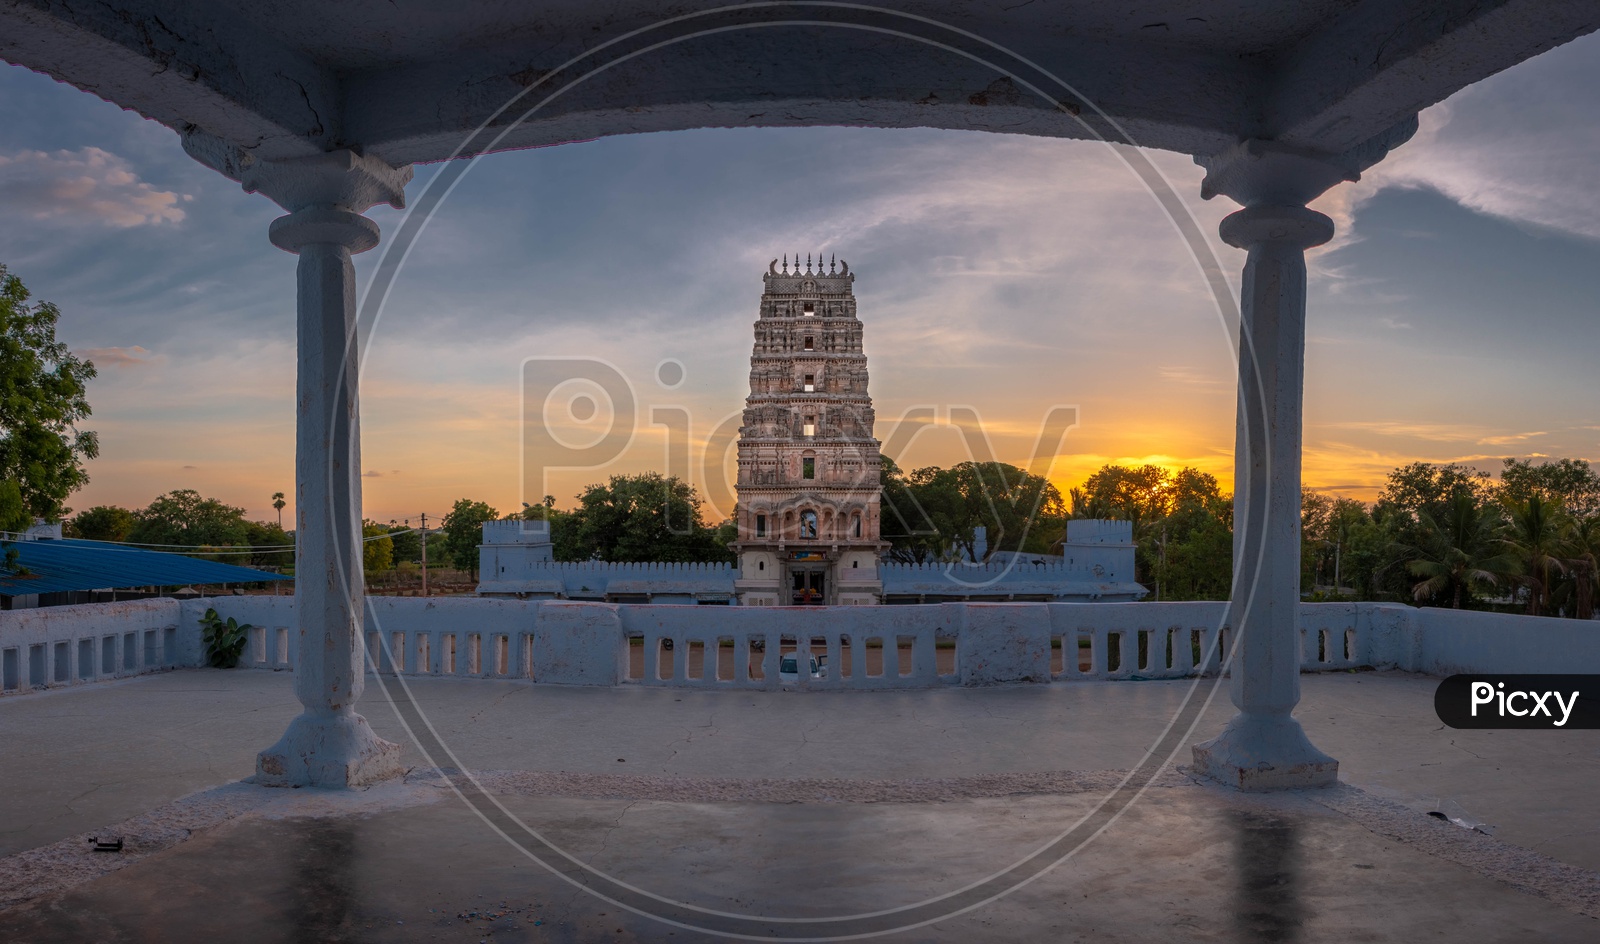 Sita Rama temple in ammapalli, Hyderabad